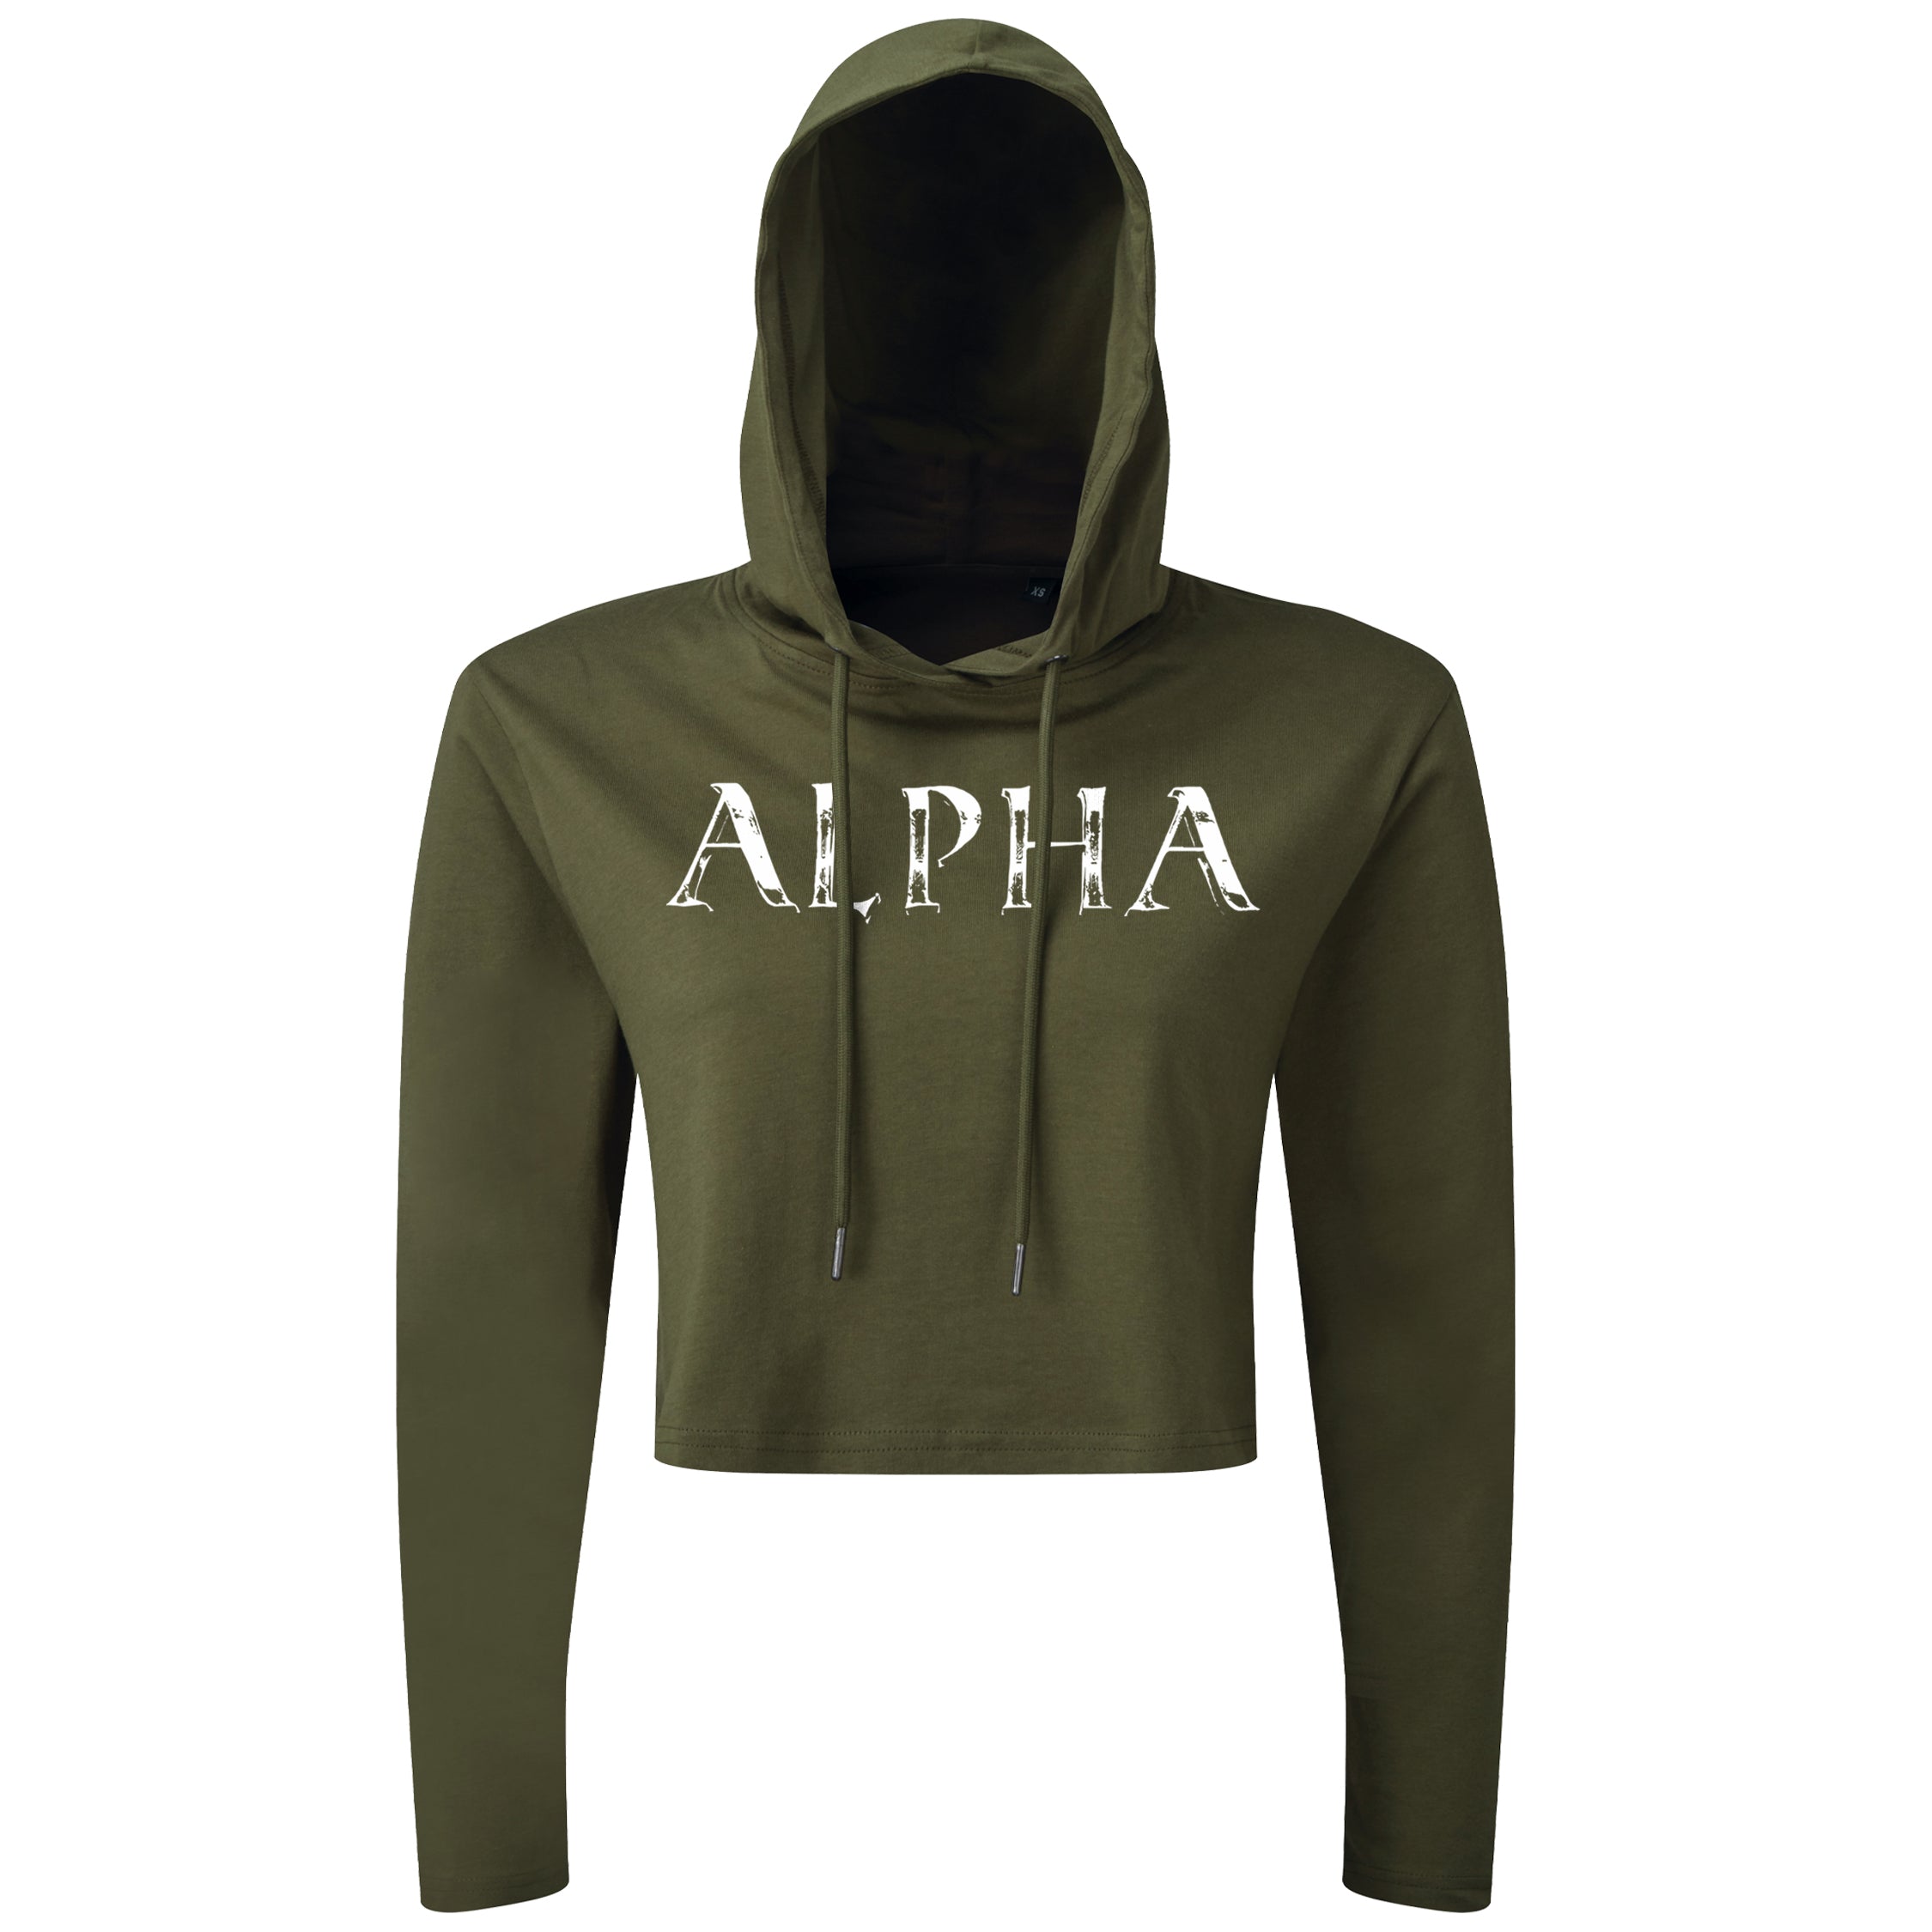 Alpha - Cropped Hoodie